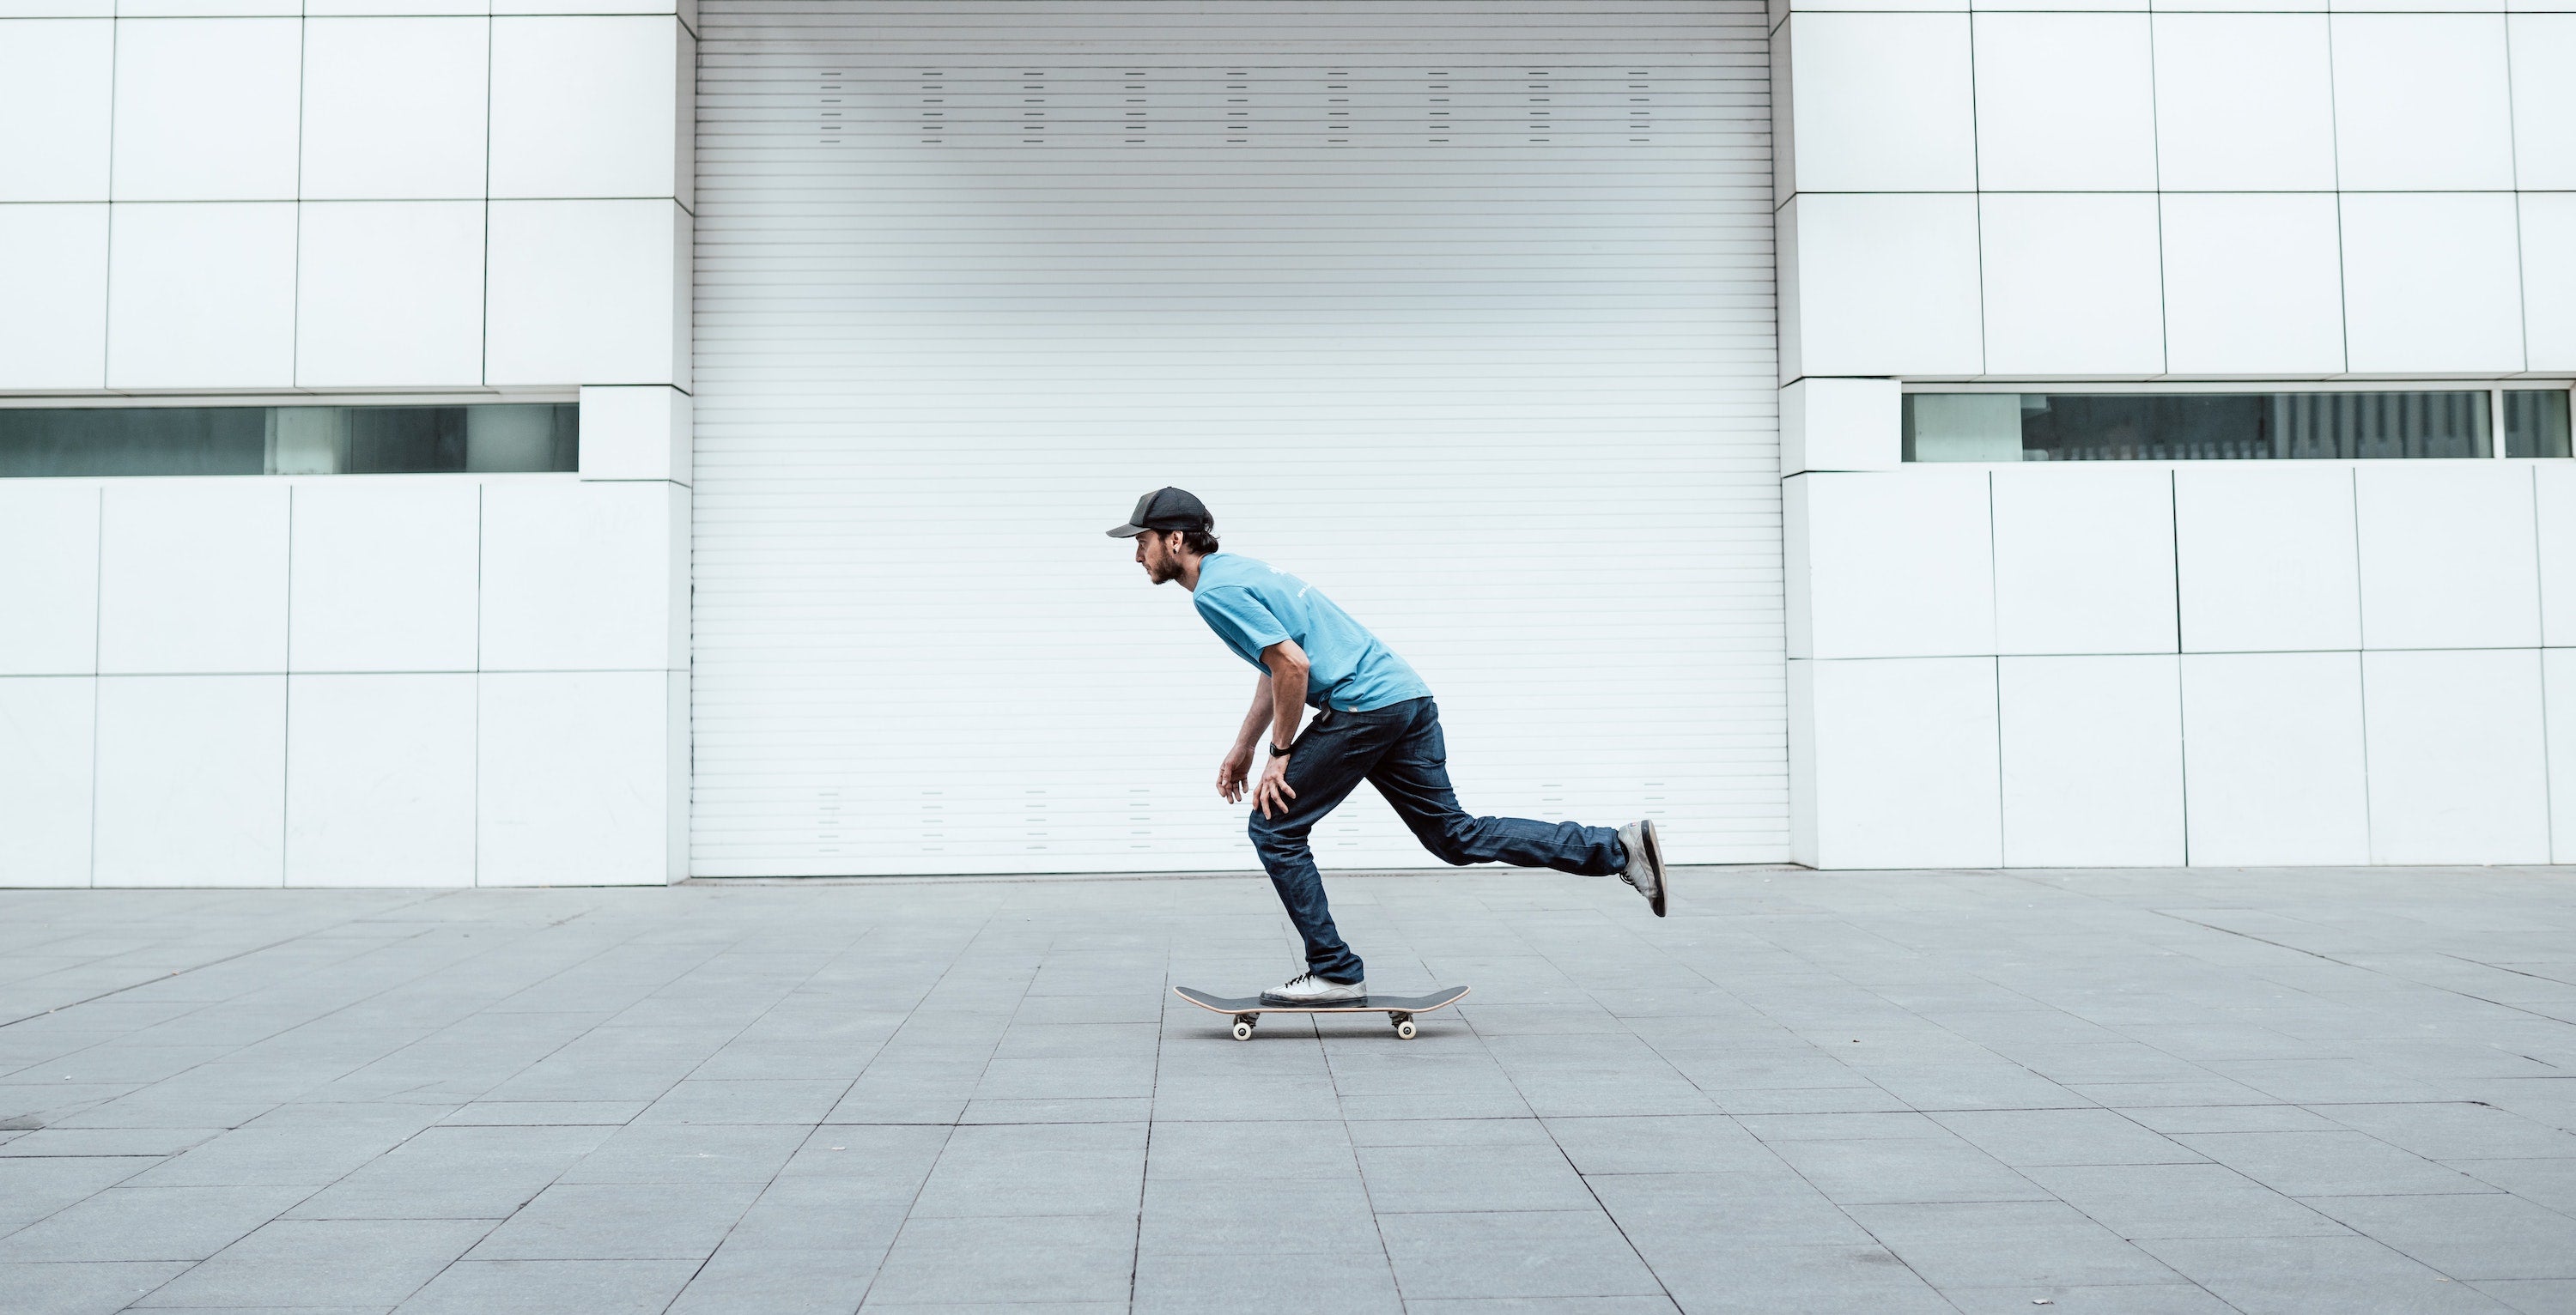 Should You Buy A Complete Or Custom Skateboard